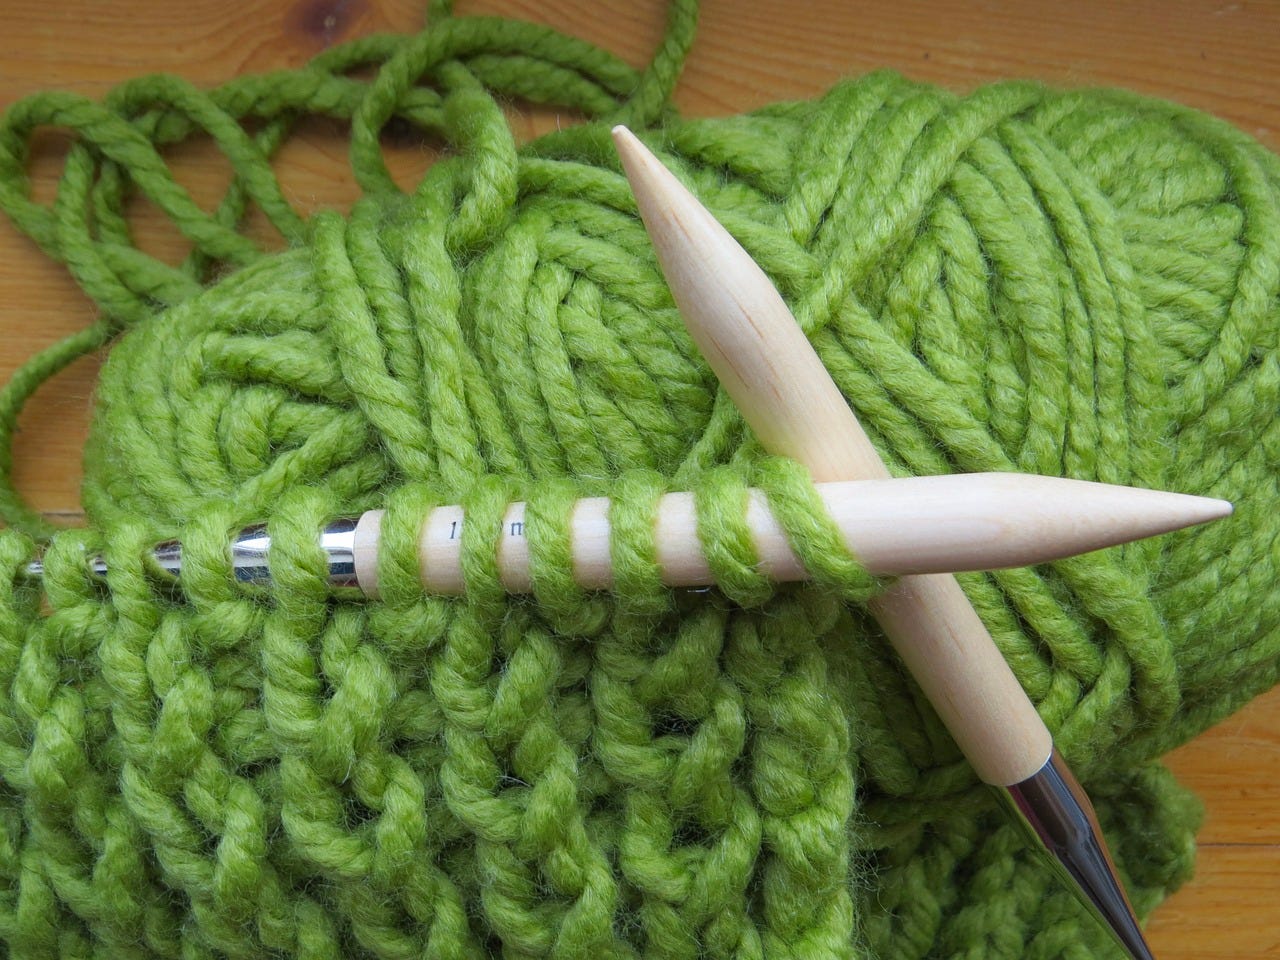 green yarn skein, needles, and knitting